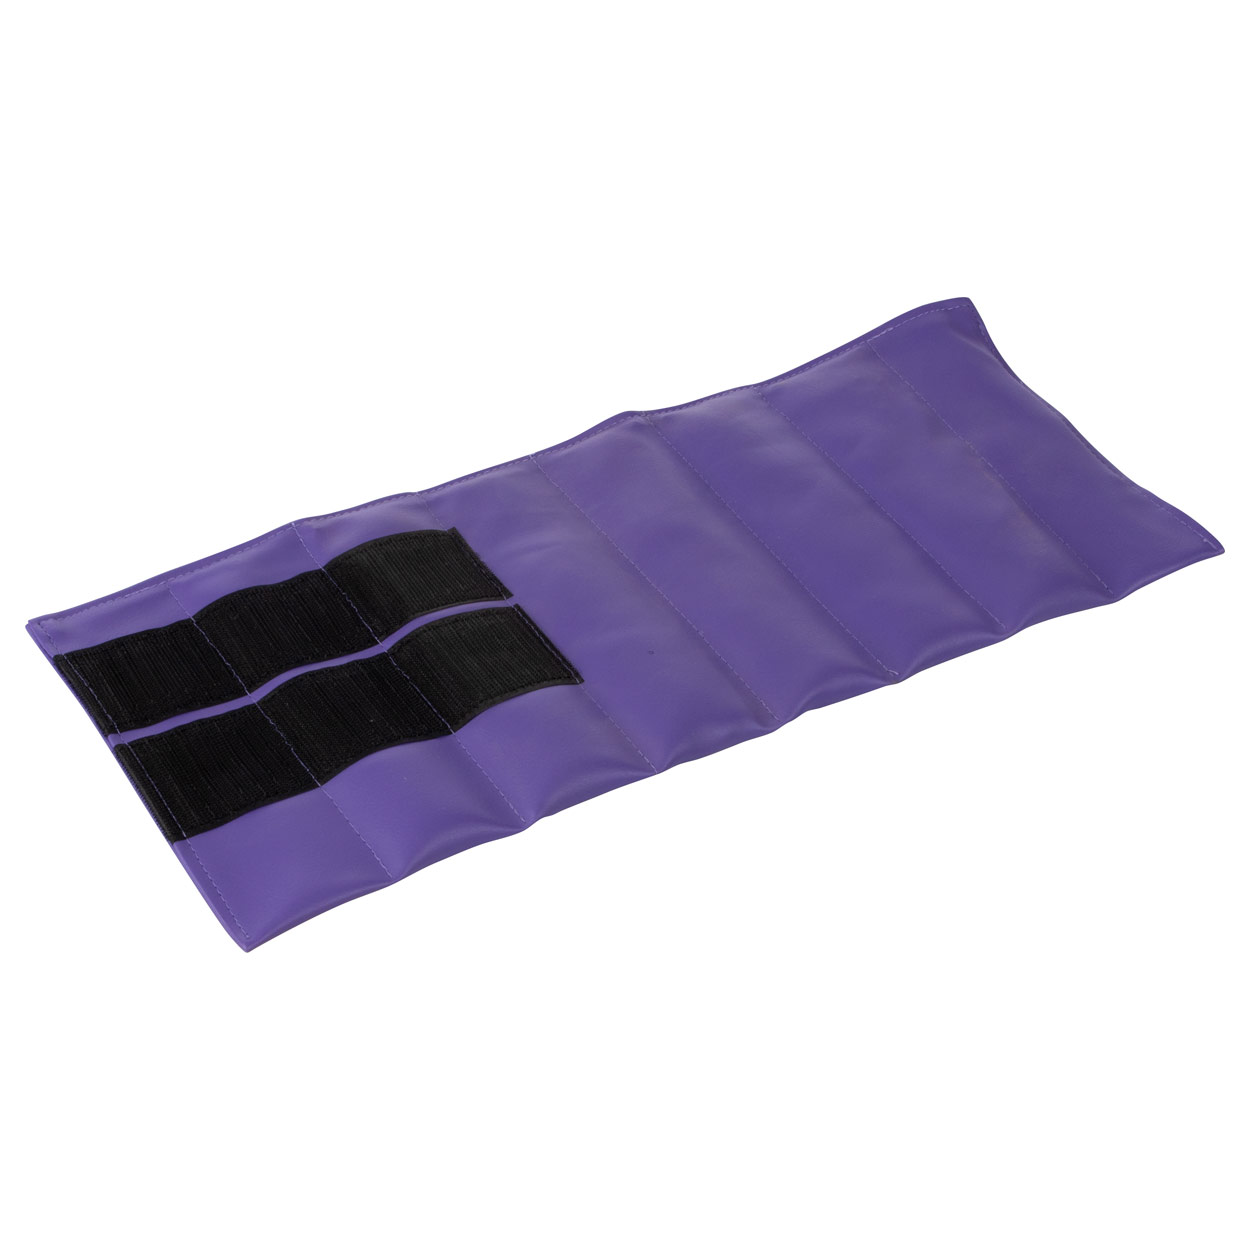 Weight bands Sport-Tec purple, | buy 2 kg online strips, piece Velcro with cm, 48x20